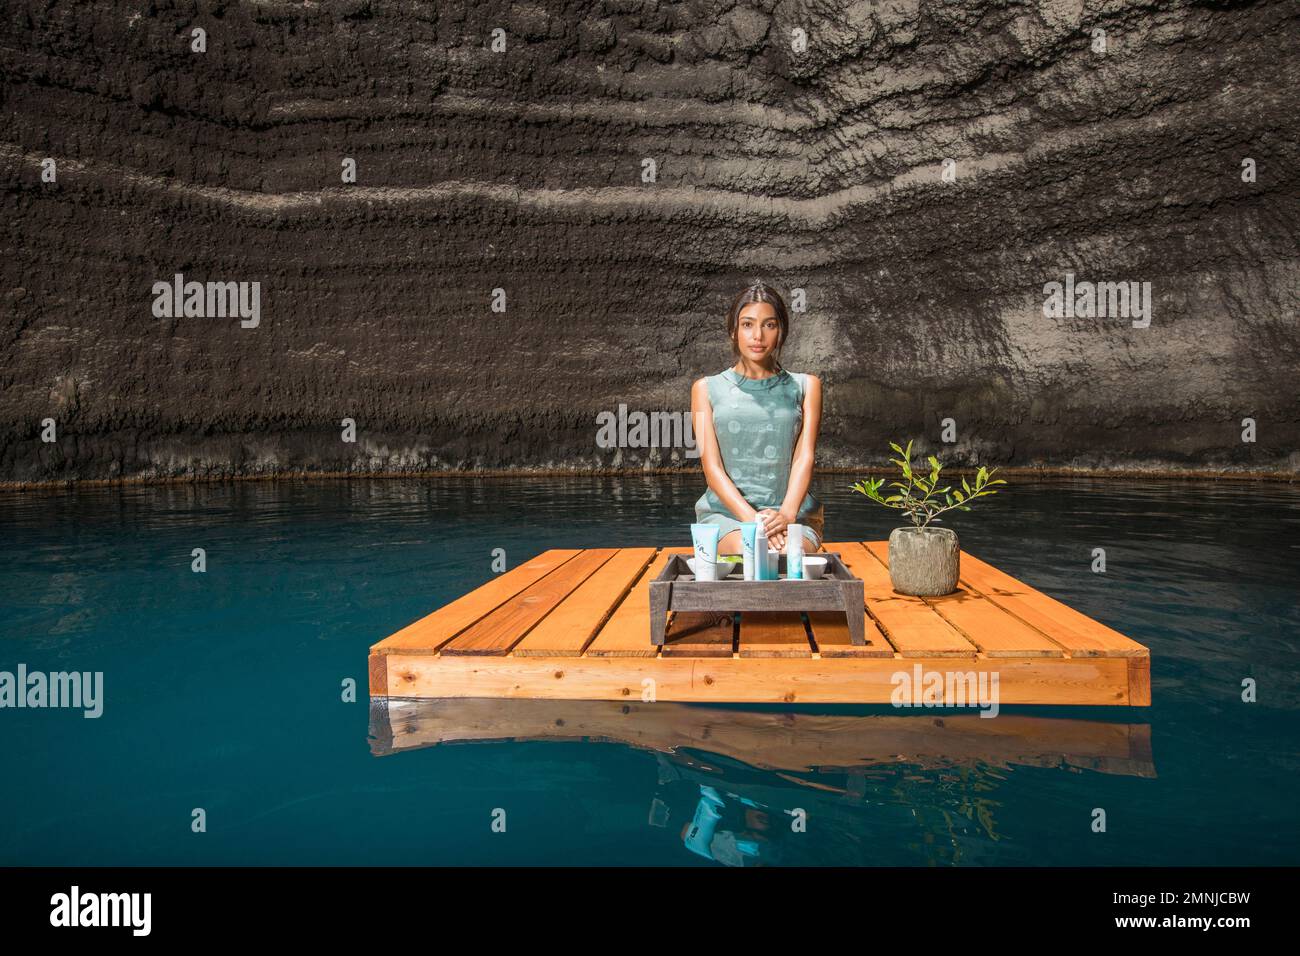 Beautiful woman kneeling on wooden raft on pond Stock Photo